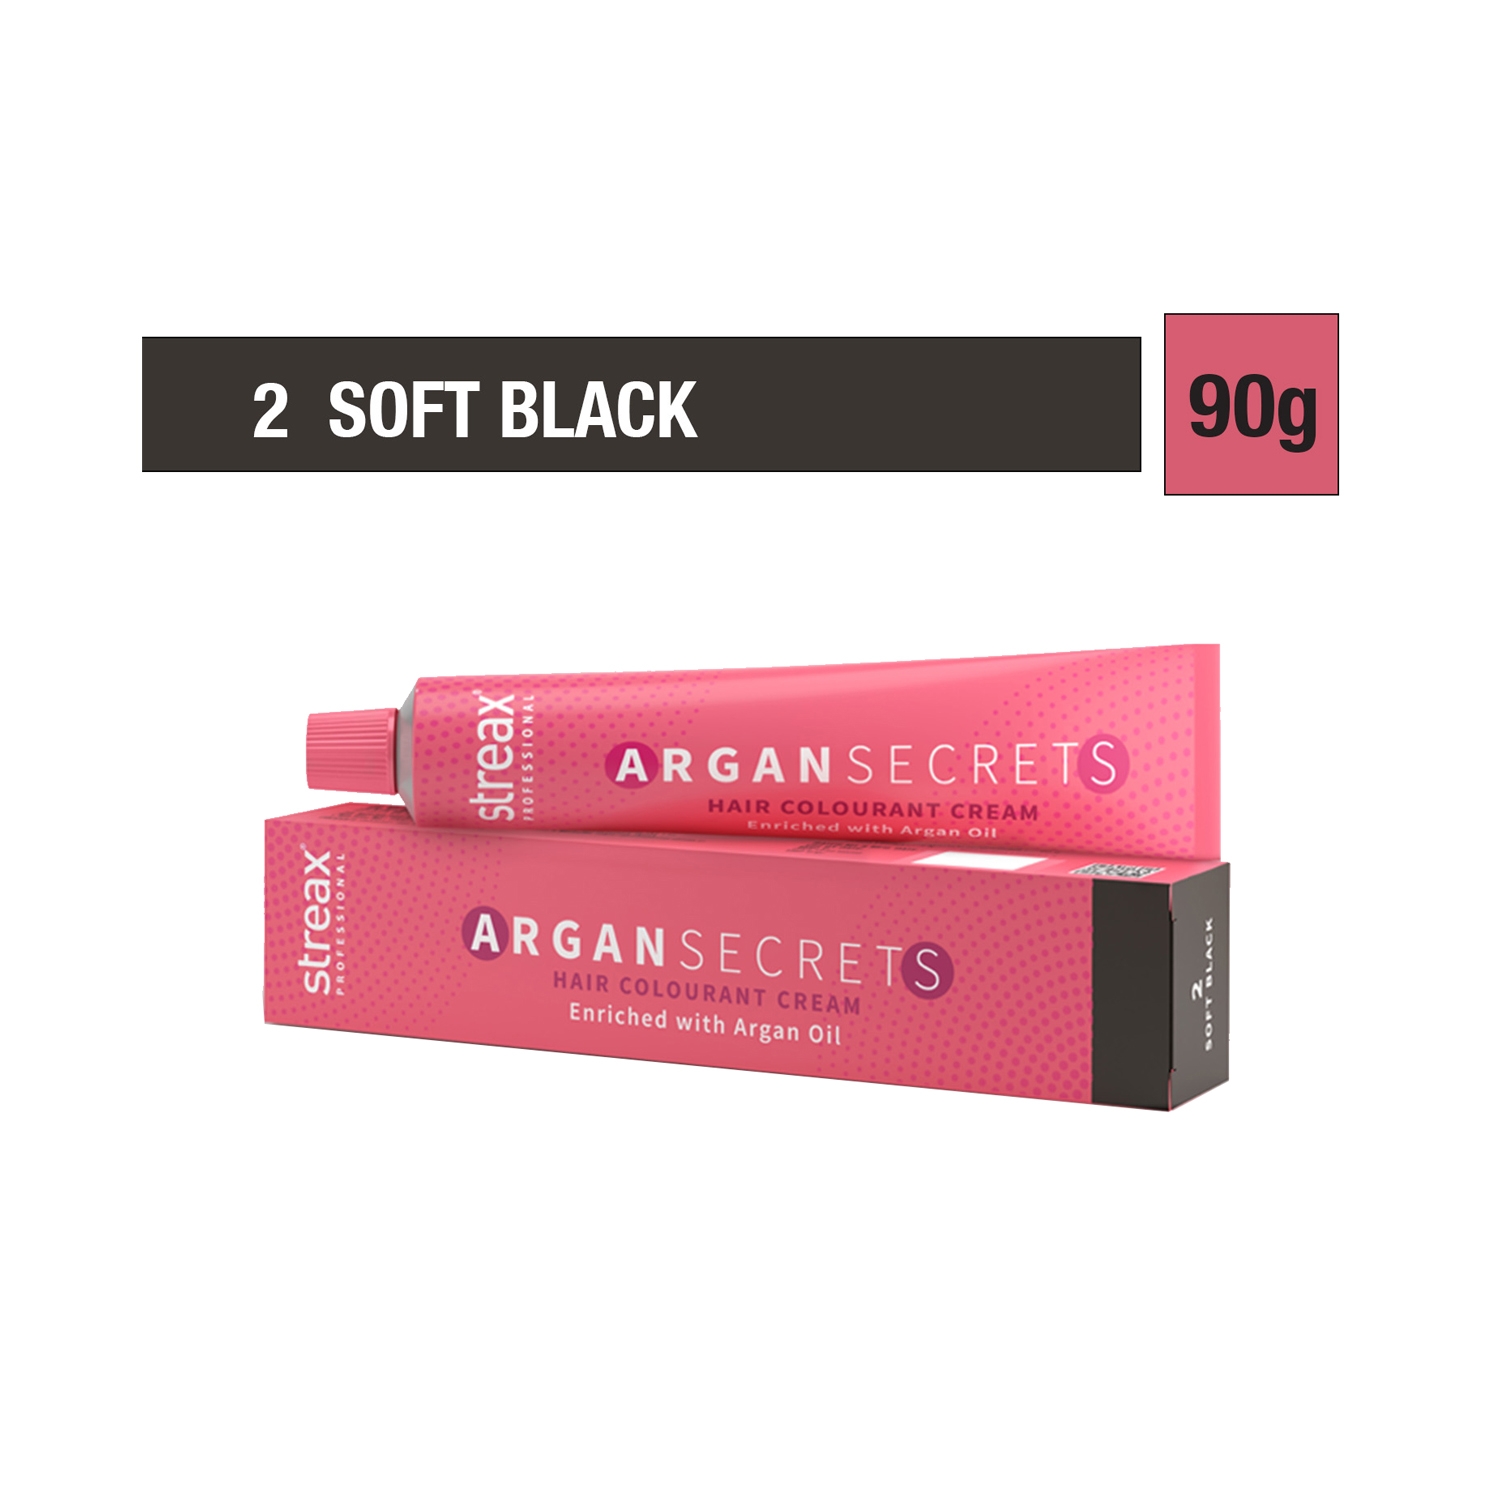 Streax Professional | Streax Professional Argan Secrets Hair Colorant Cream - 2 Soft Black (90g)